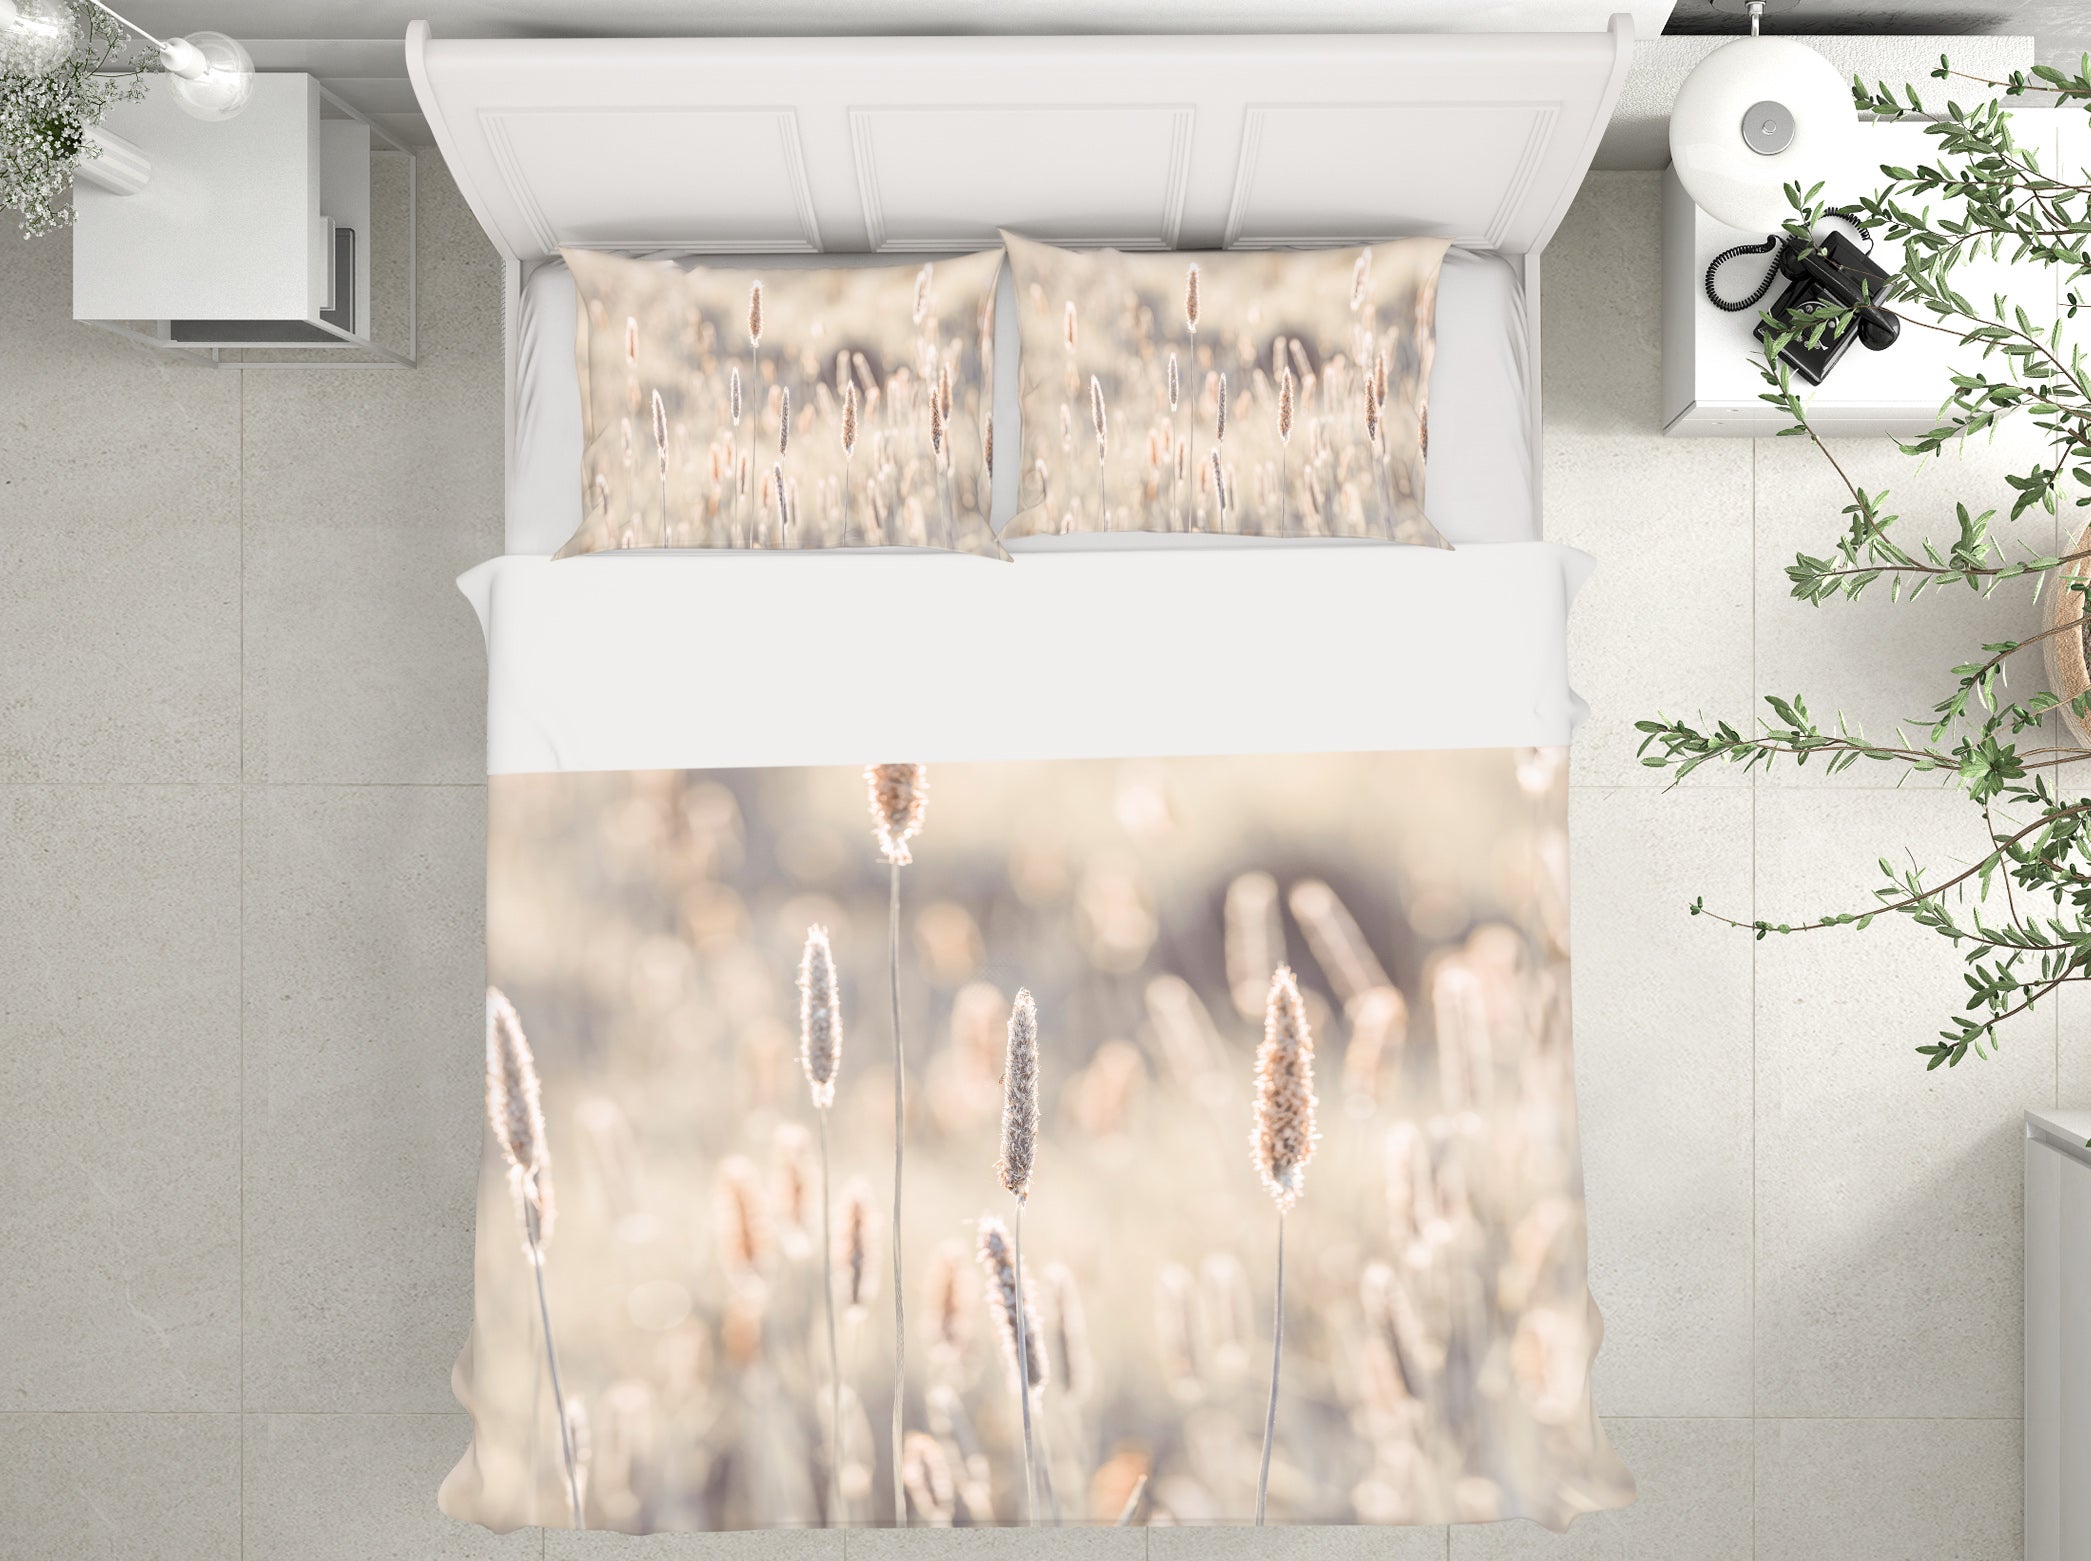 3D Hazy Grass 7143 Assaf Frank Bedding Bed Pillowcases Quilt Cover Duvet Cover